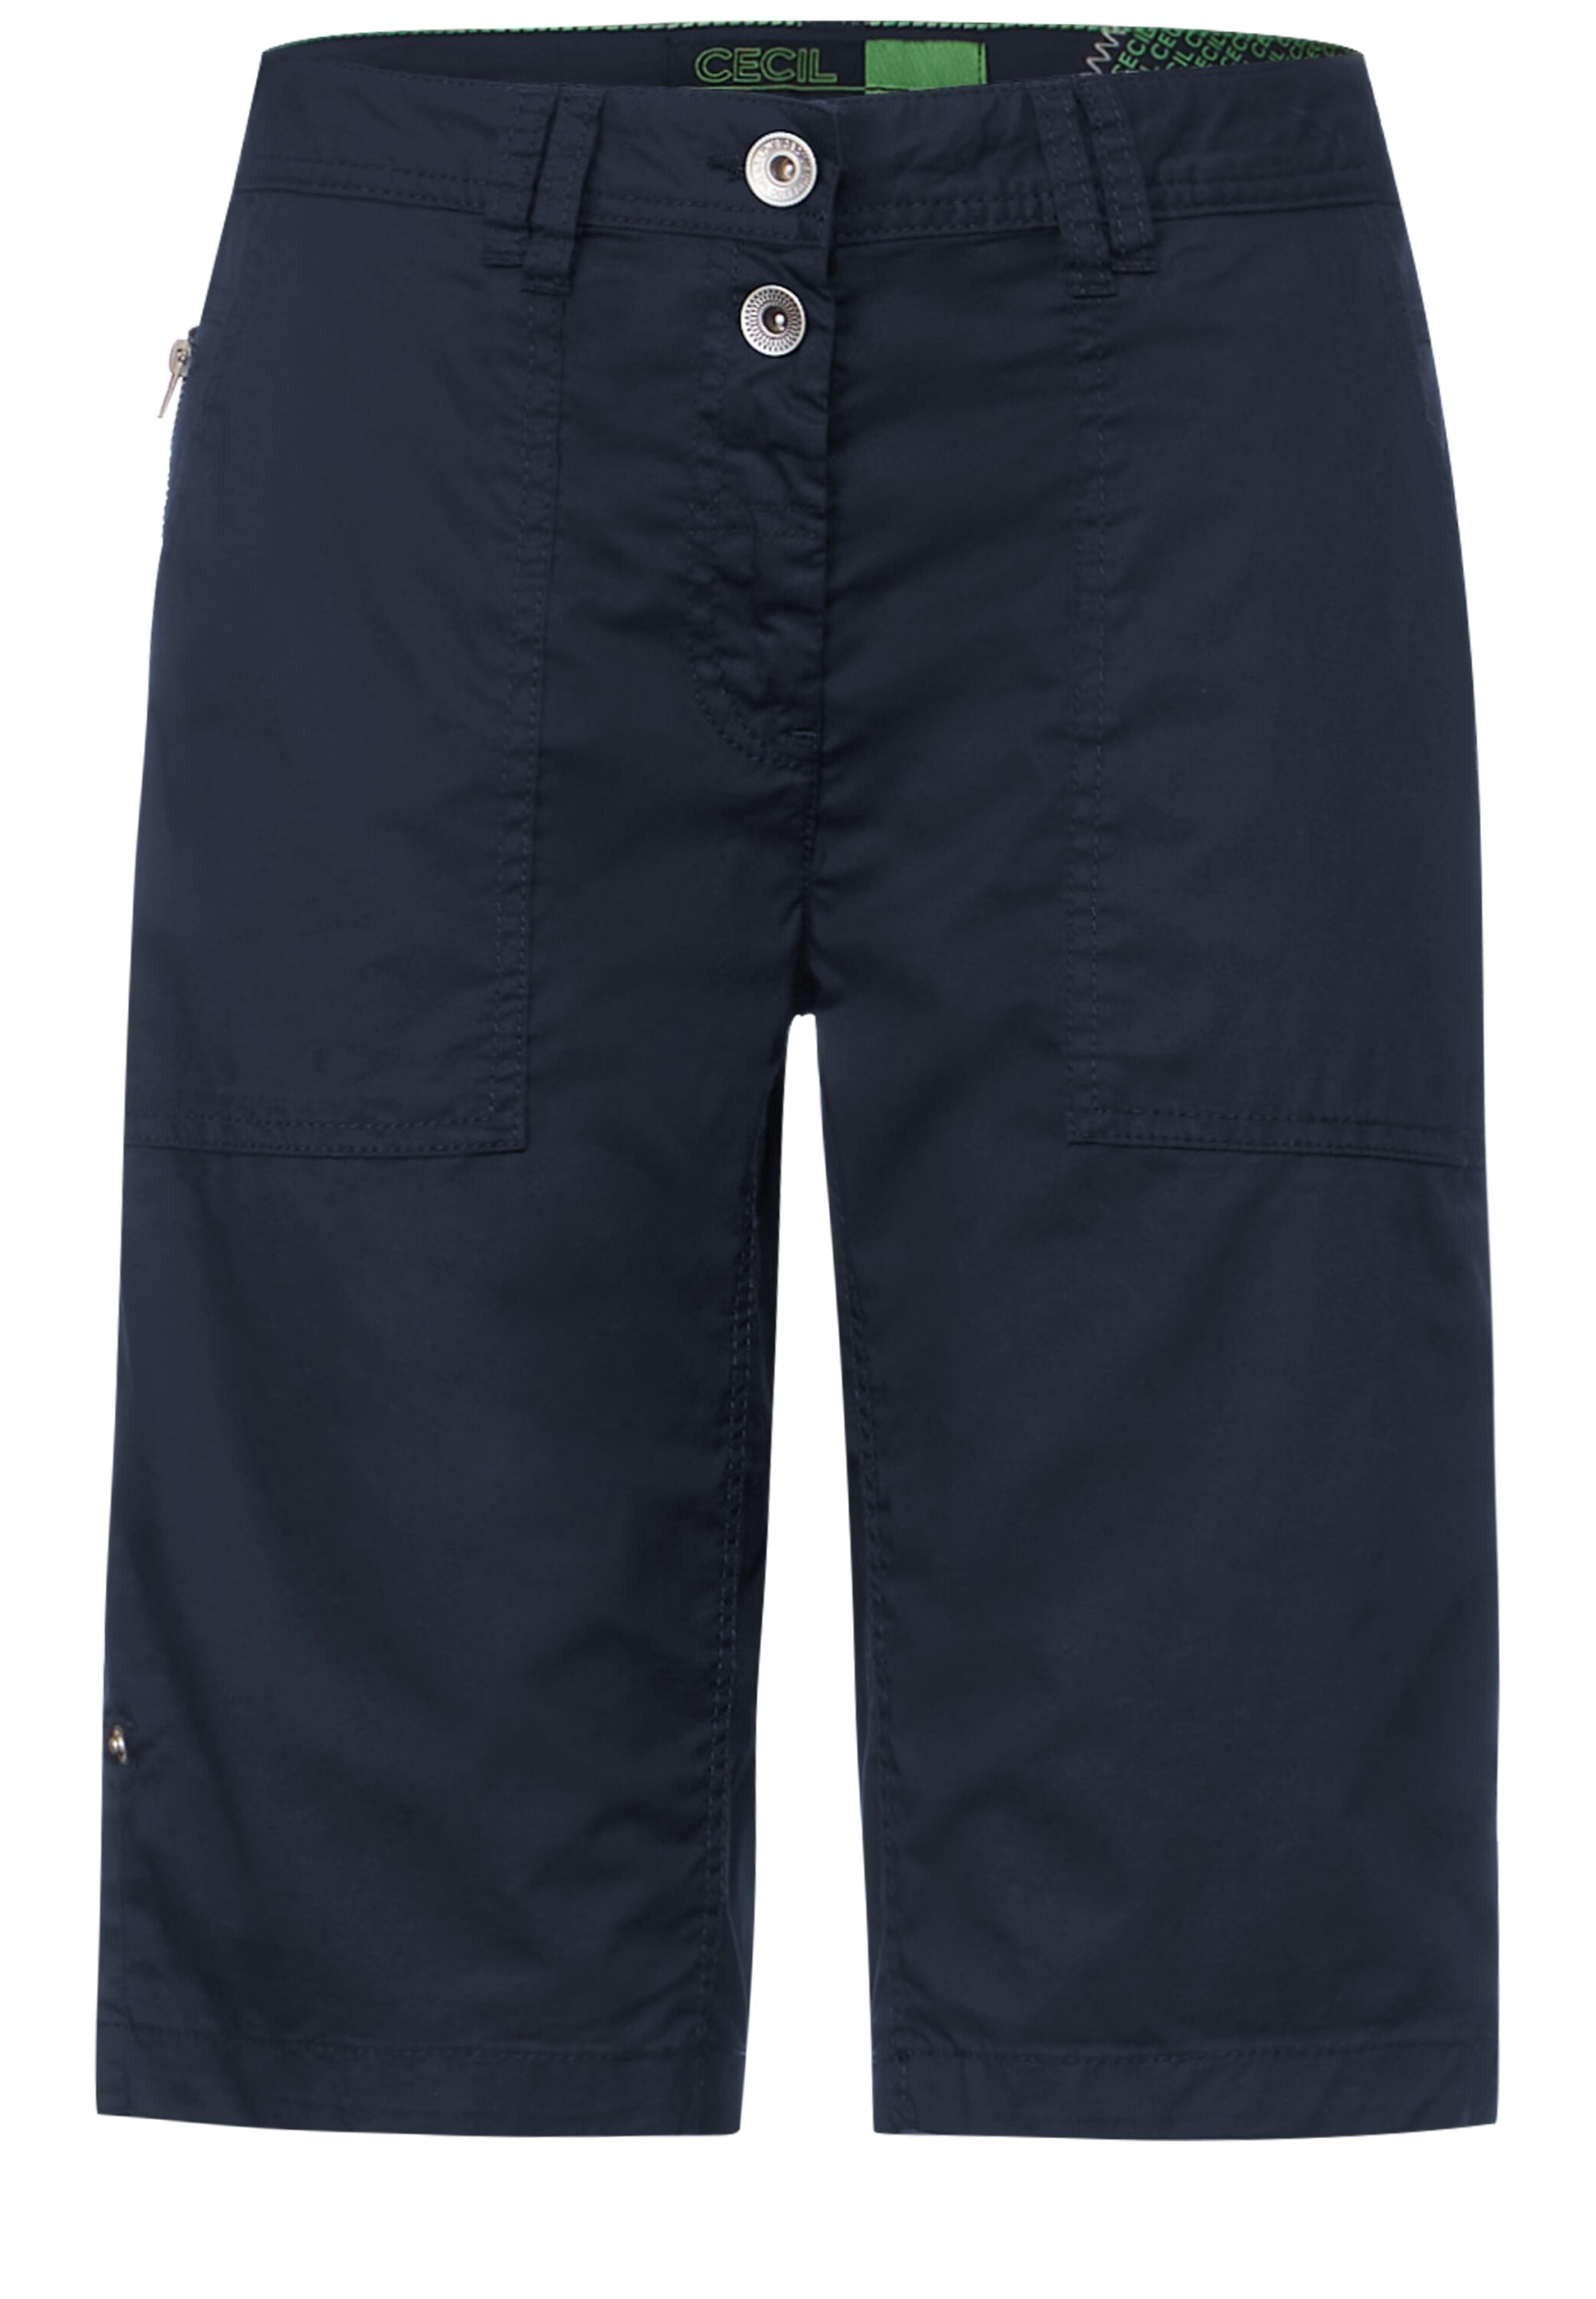 | Shorts | New 33 blue York | B376478-10128-33 deep Style NOS